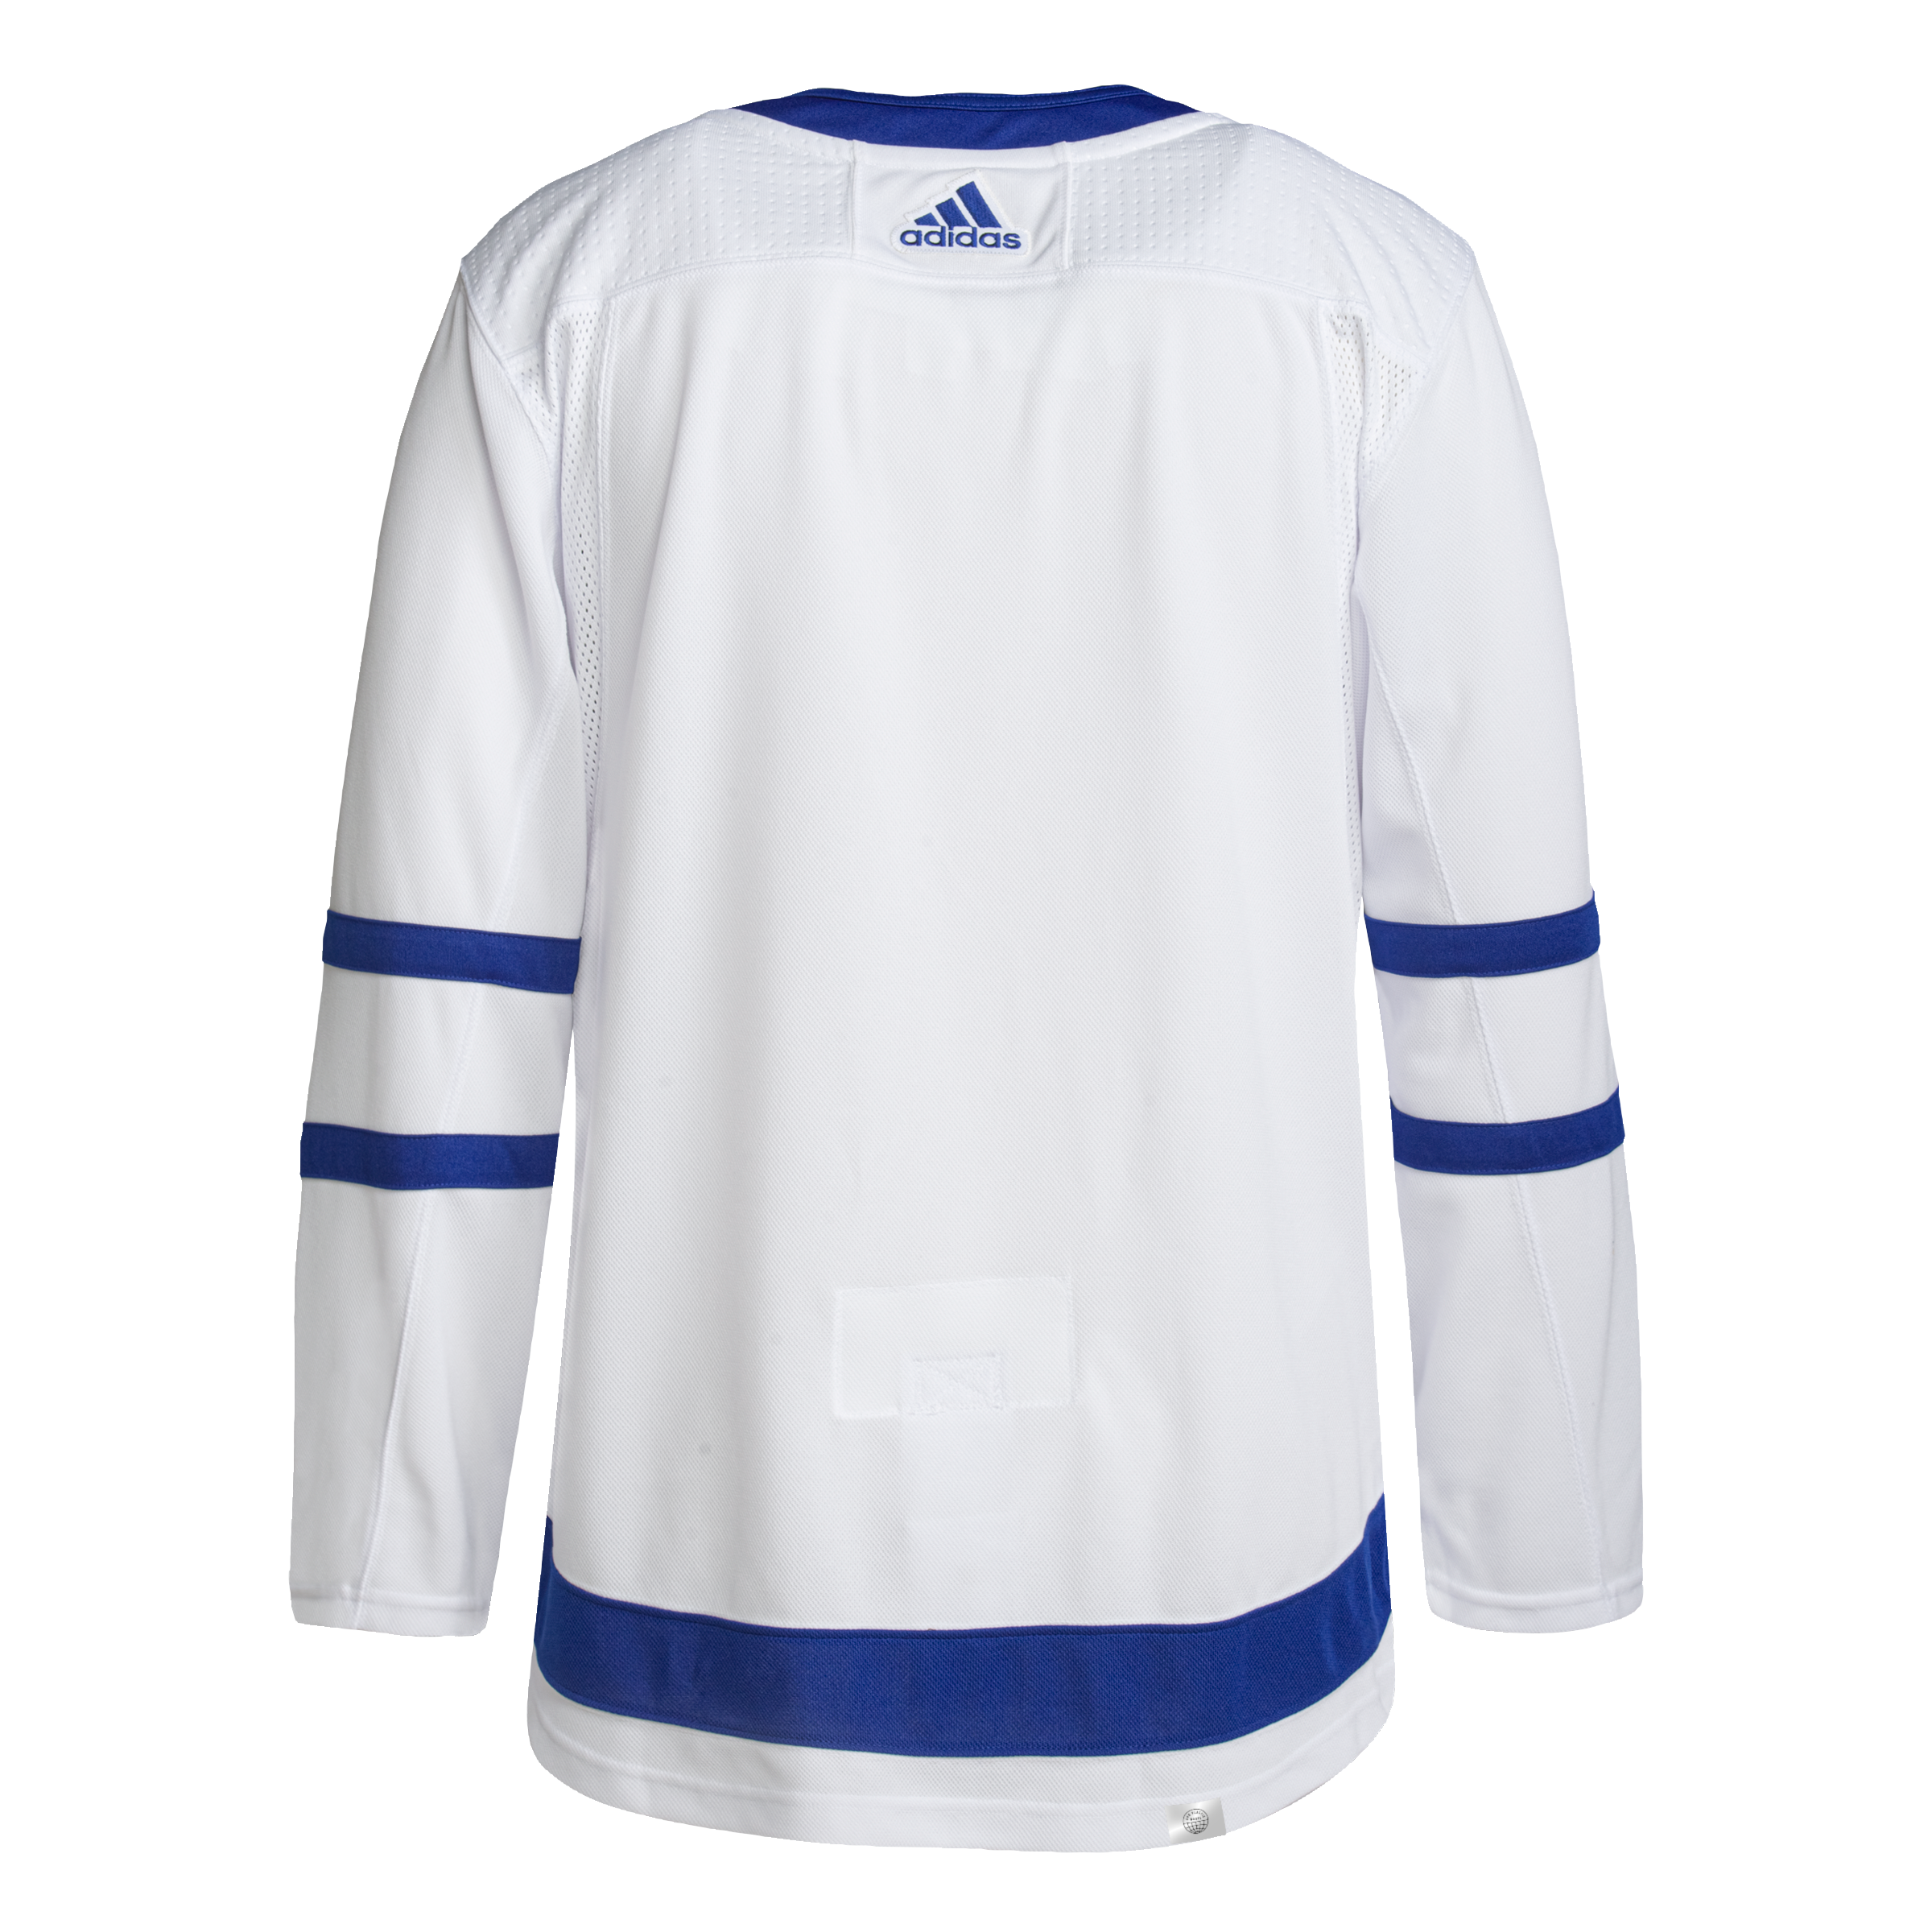 Customizable Toronto Maple Leafs Adidas Primegreen Authentic NHL